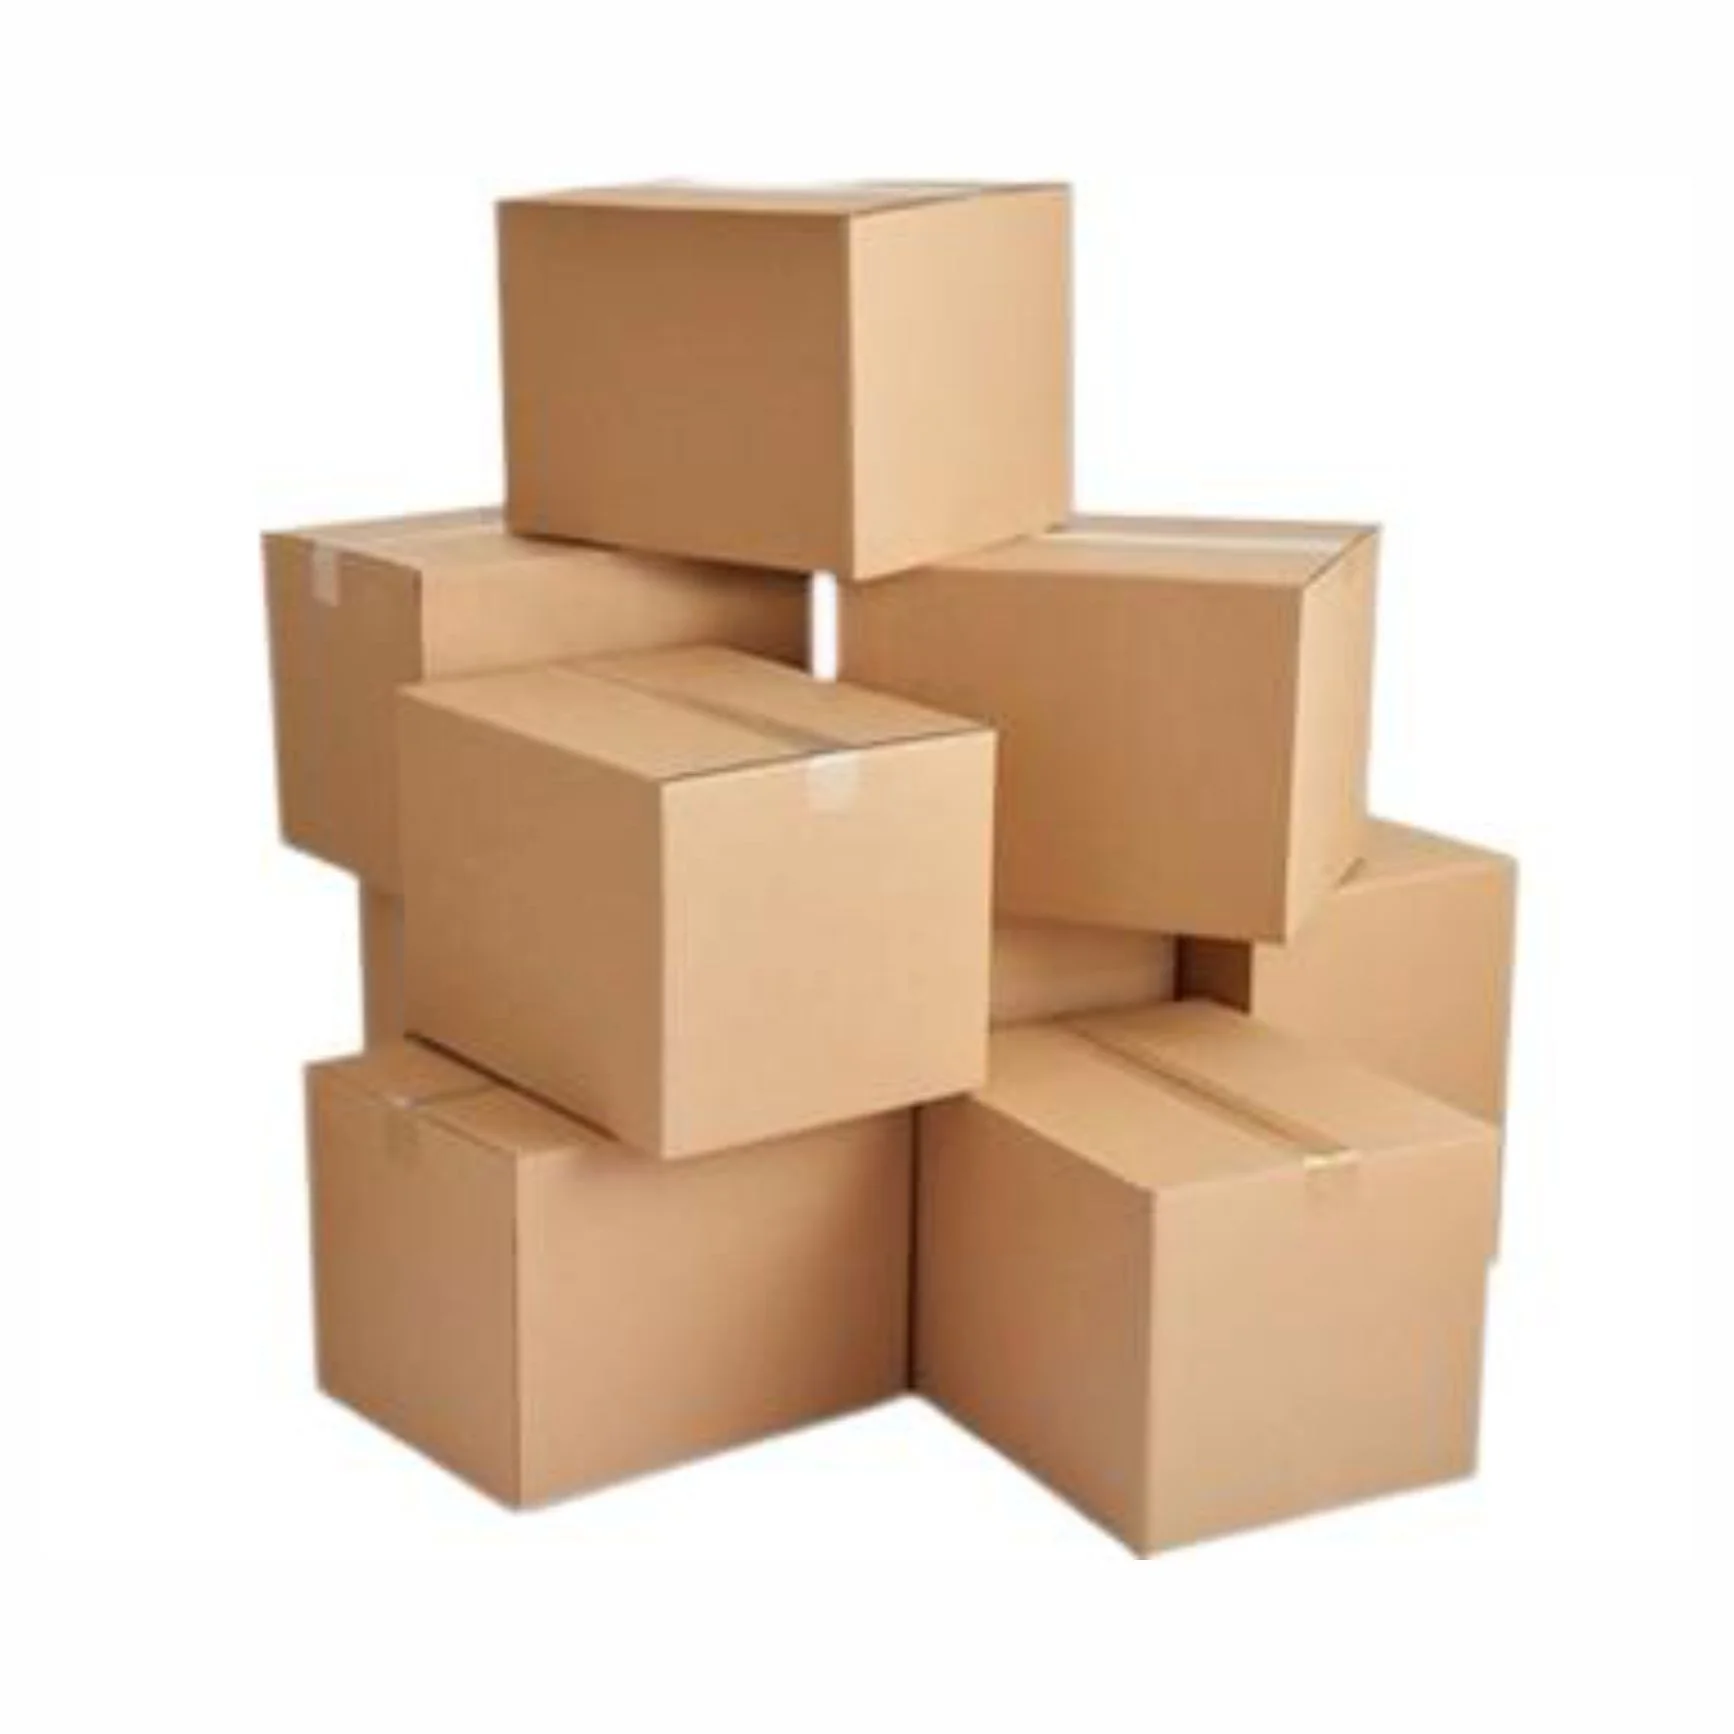 Company package. Картонная коробка. Картонные коробки склад. Коробки картонные стопка. Короб картонный на склад.